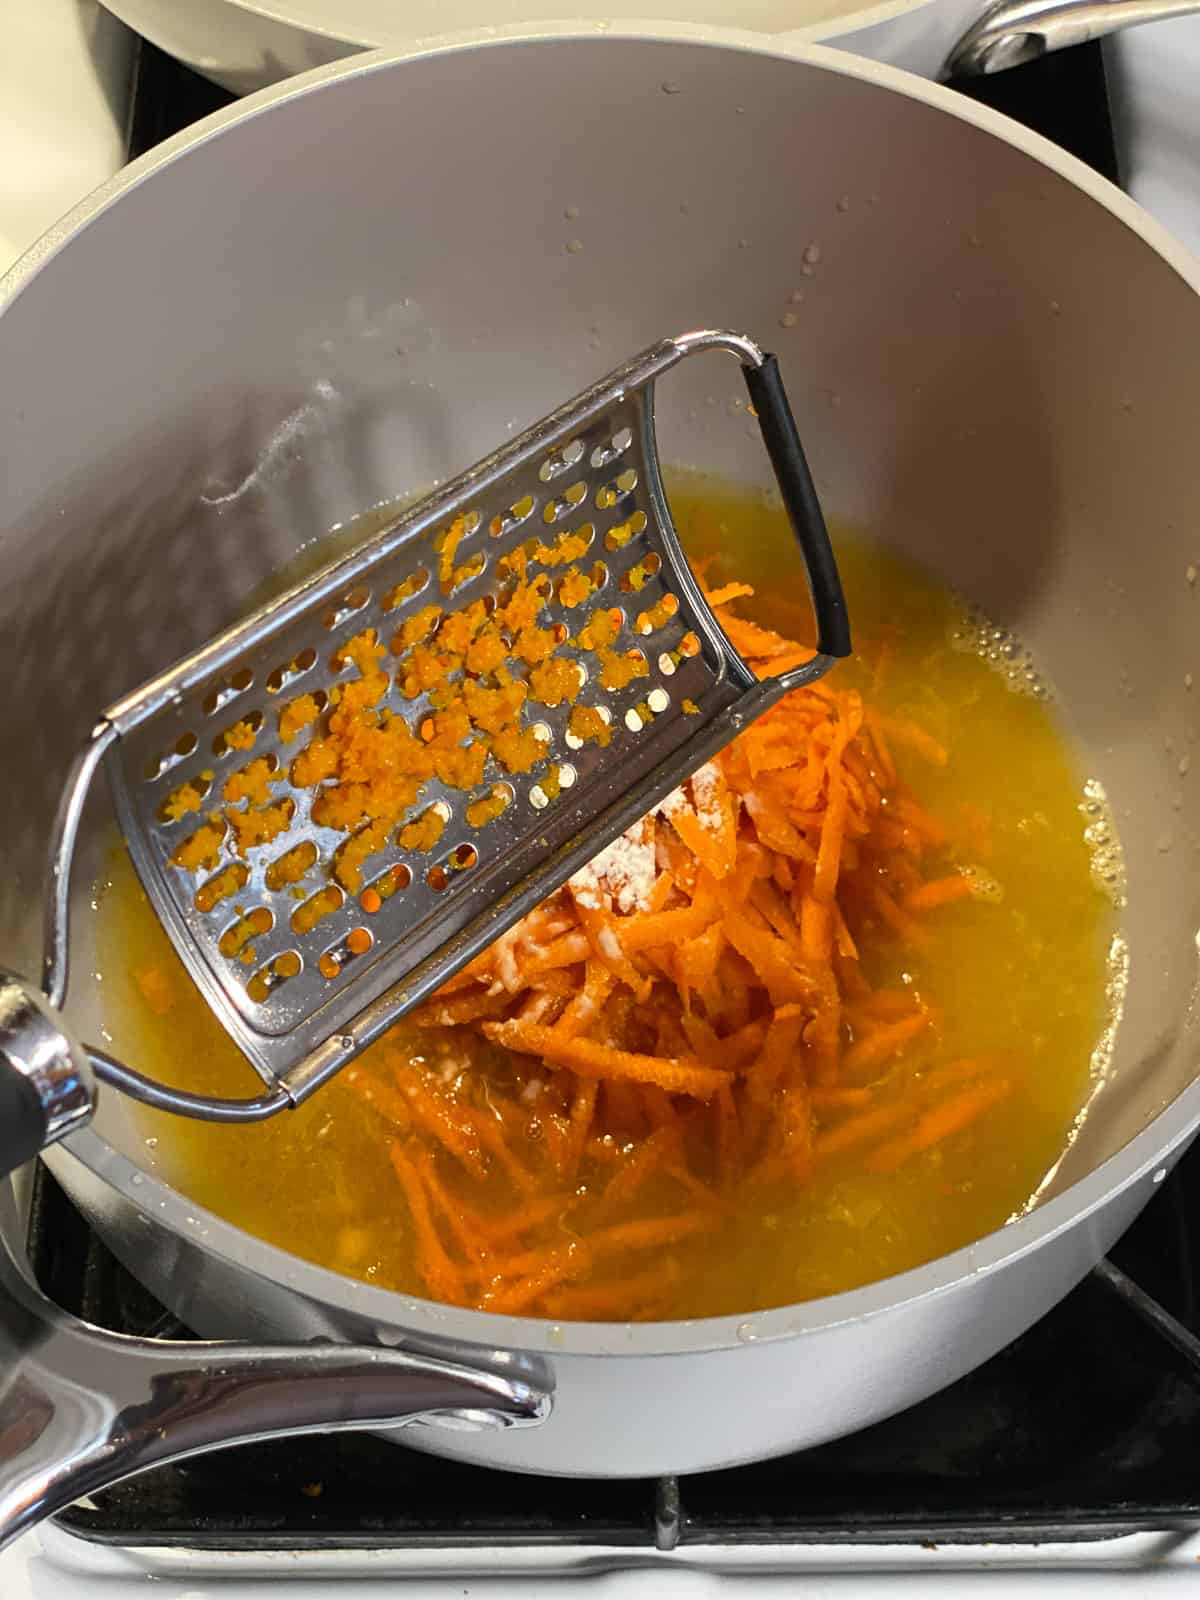 process shot of grating carrots into pan